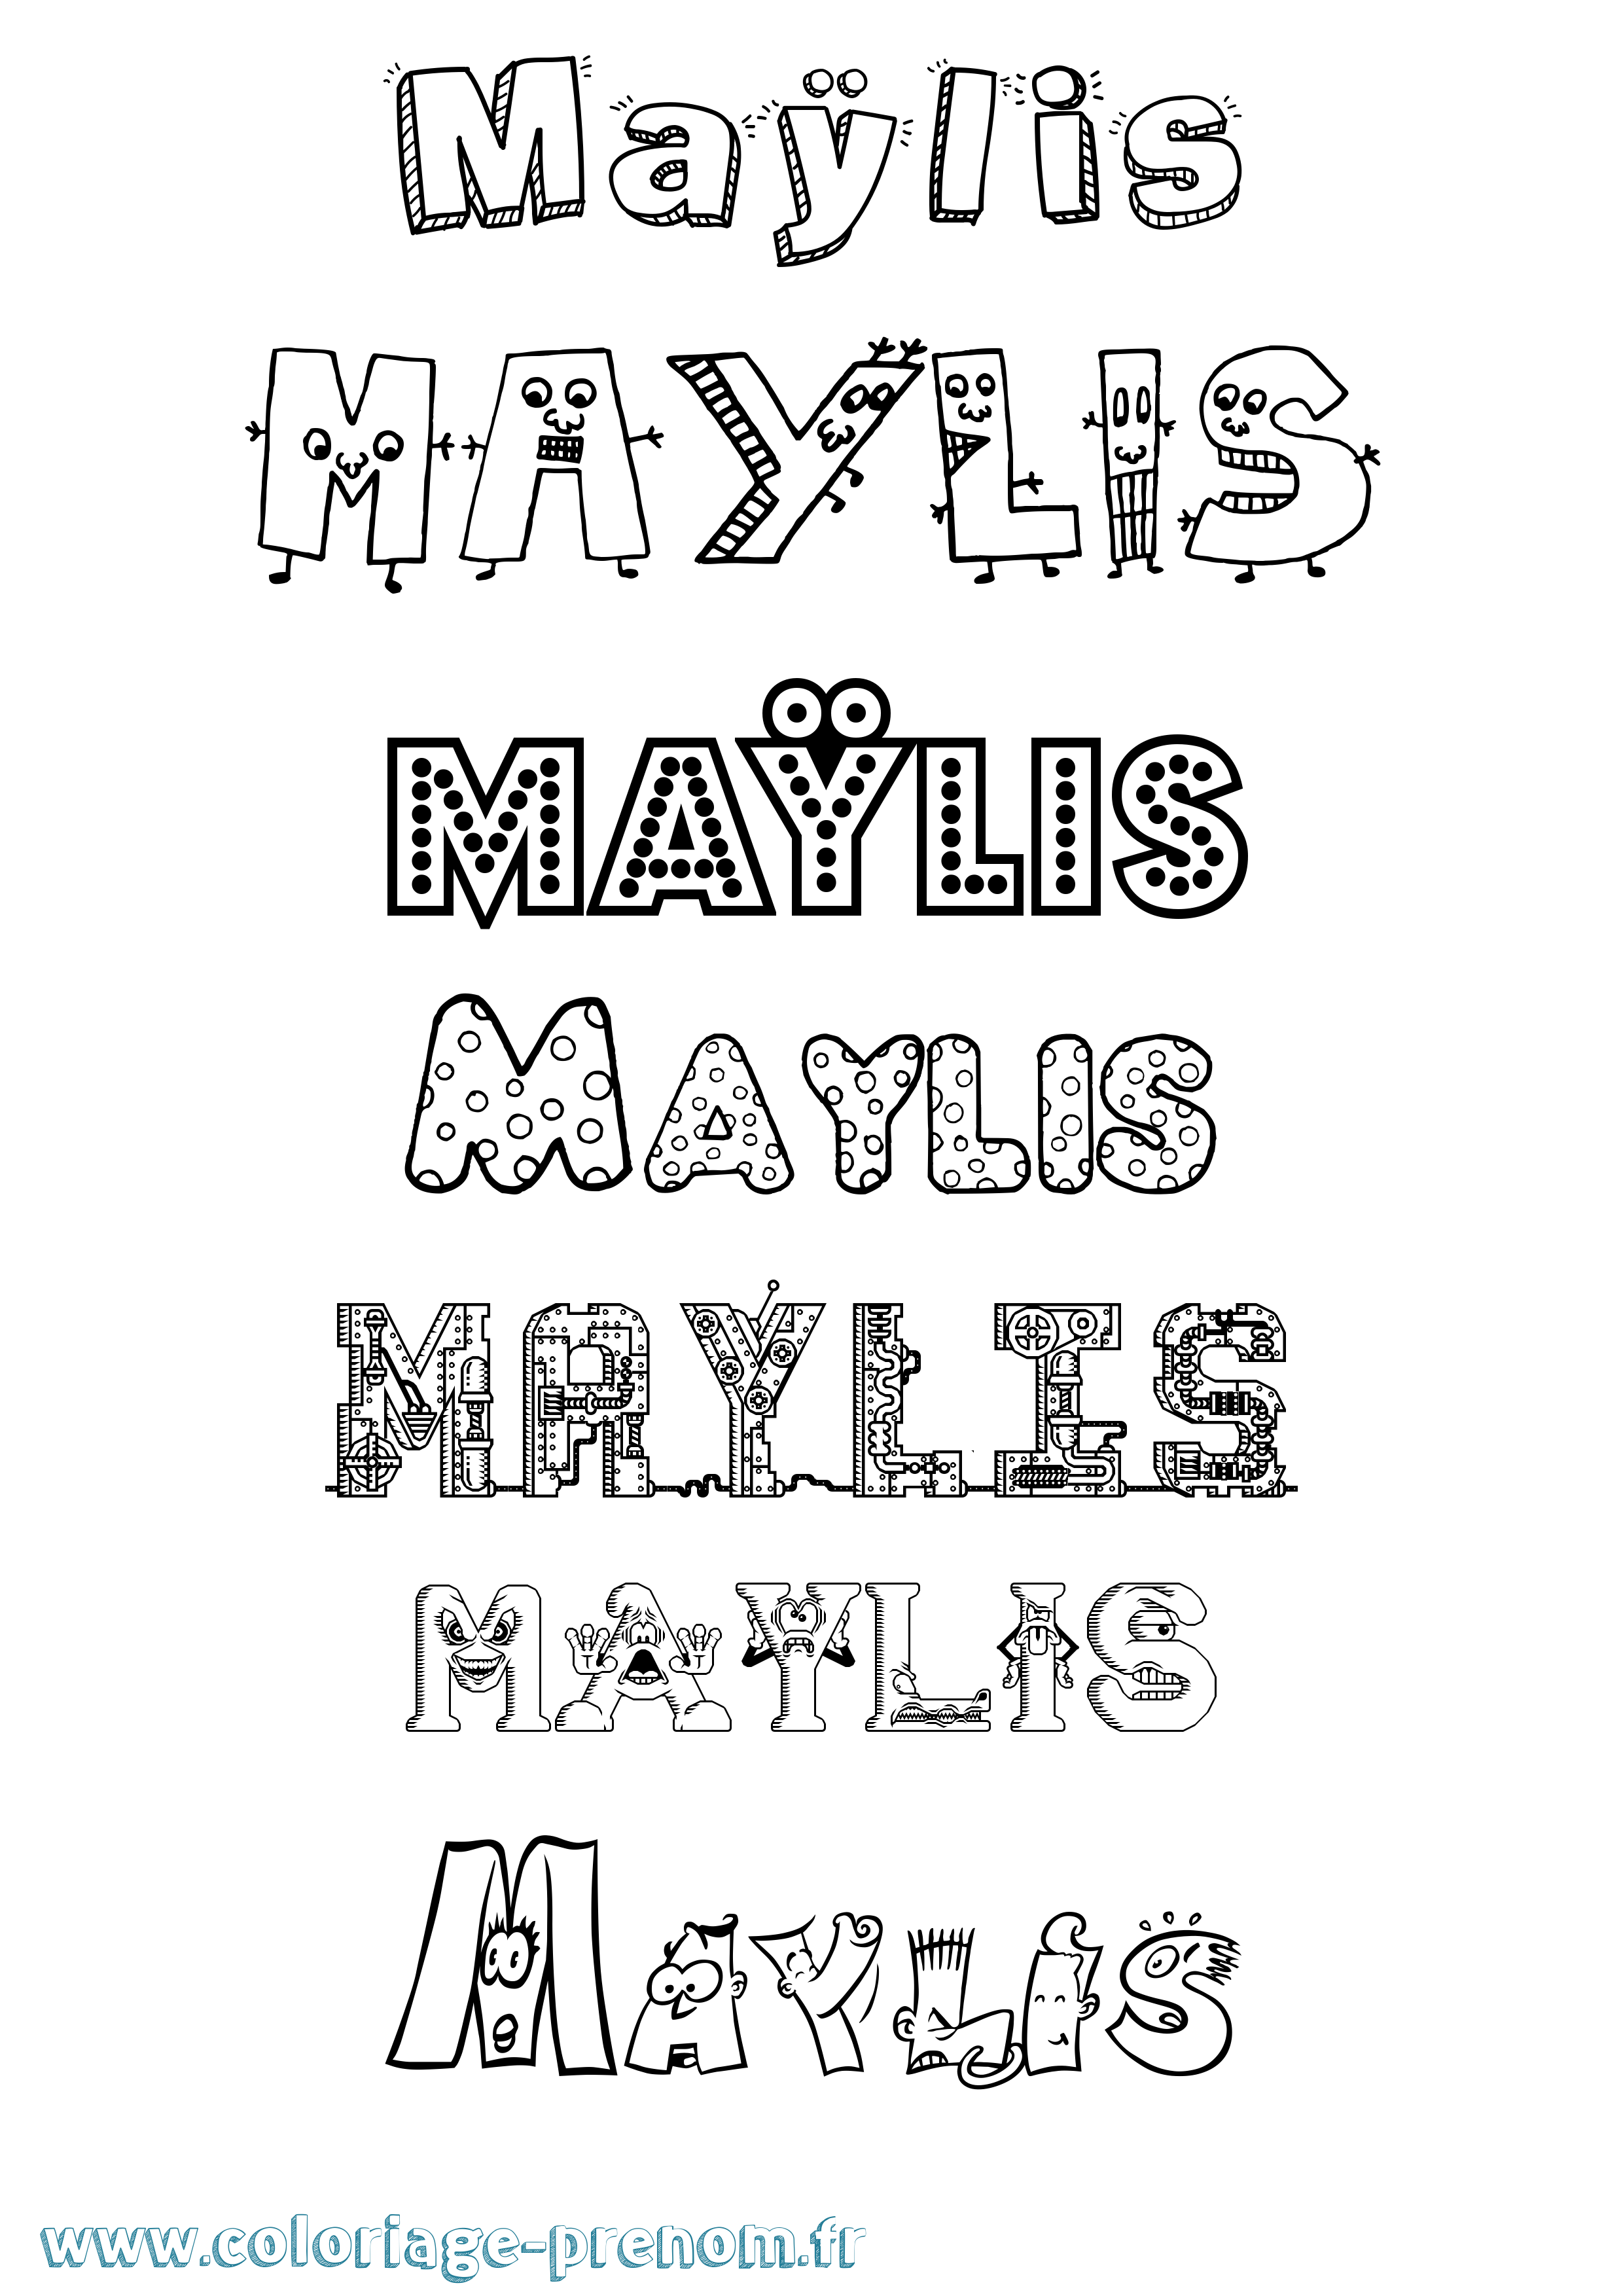 Coloriage prénom Maÿlis Fun